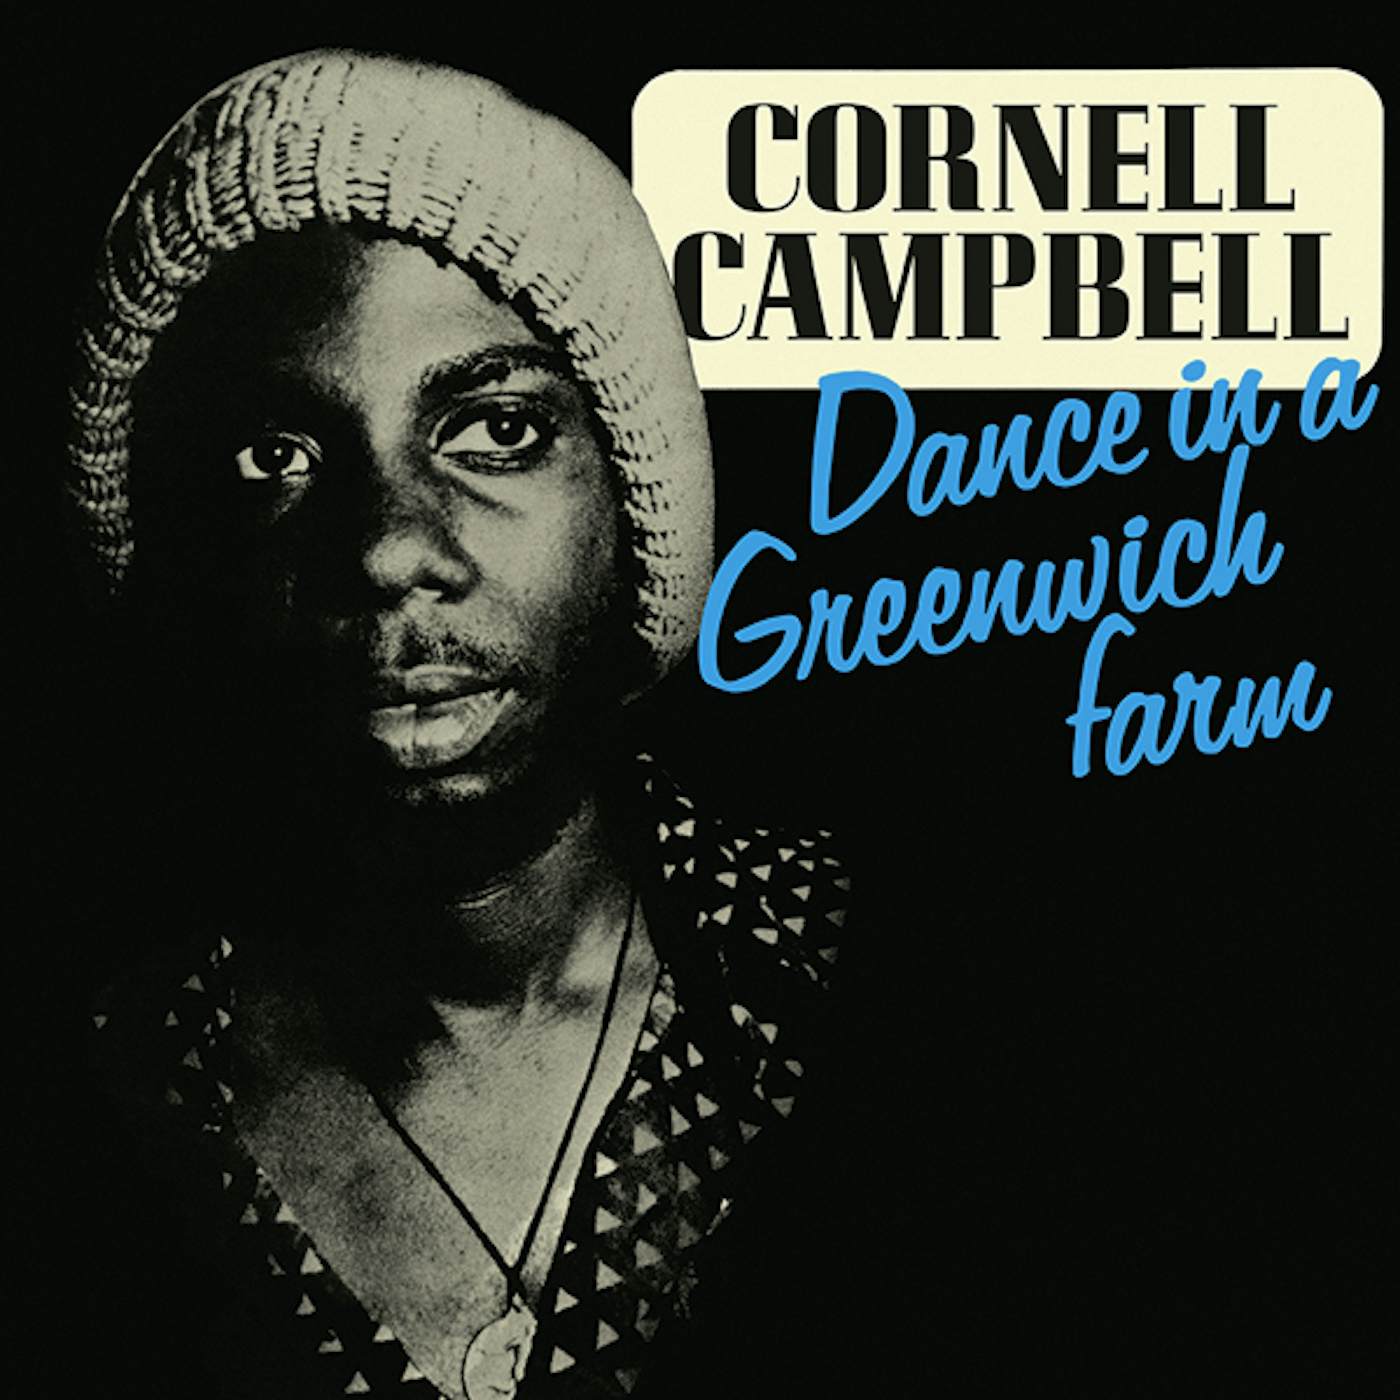 Cornell Campbell DANCE IN A GREENWICH FARM CD